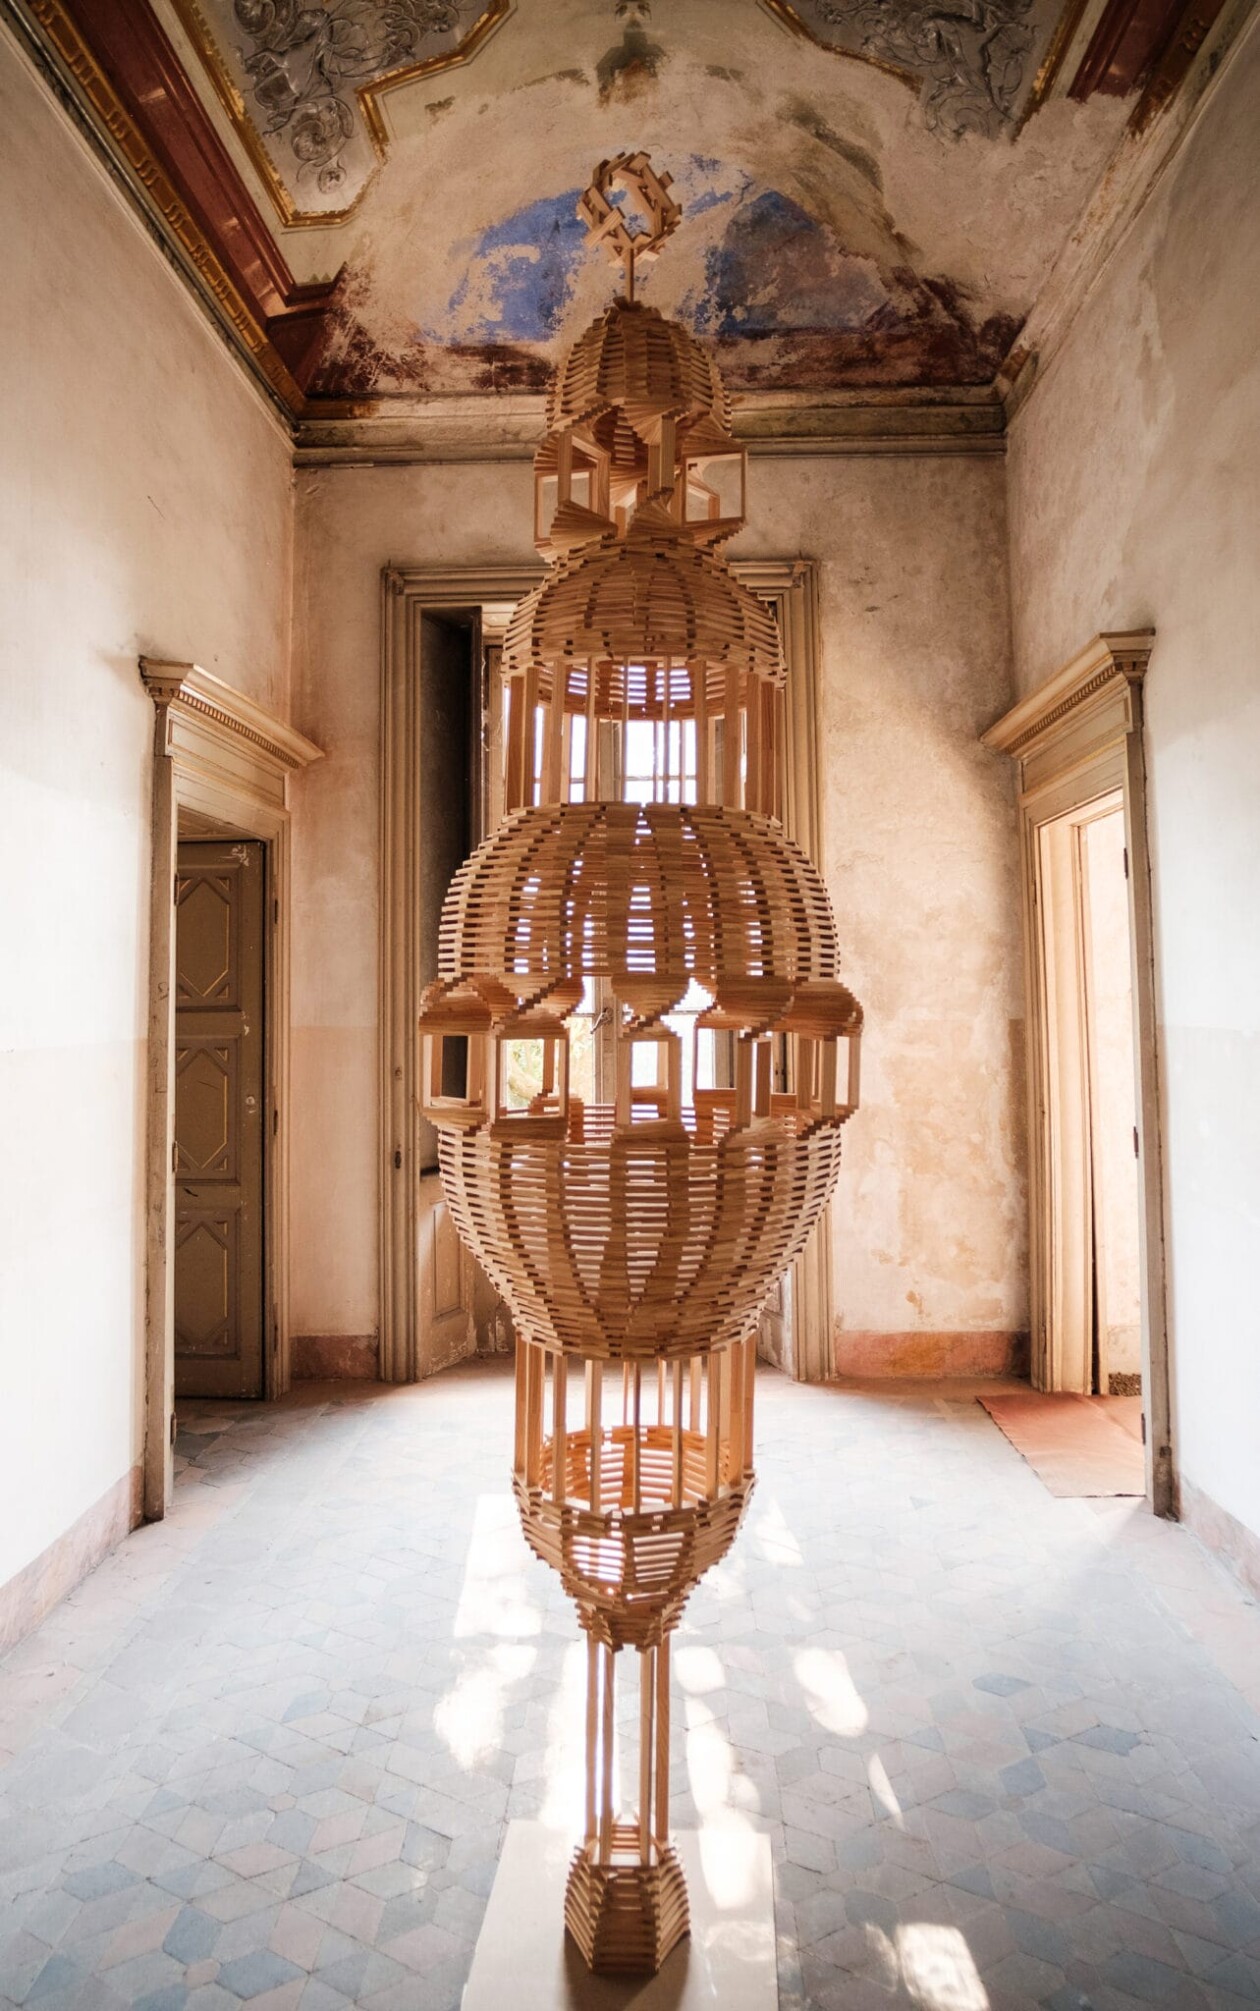 Balancing Act, The Gravity Defying Architectural Installations Of Raffaele Salvoldi (10)